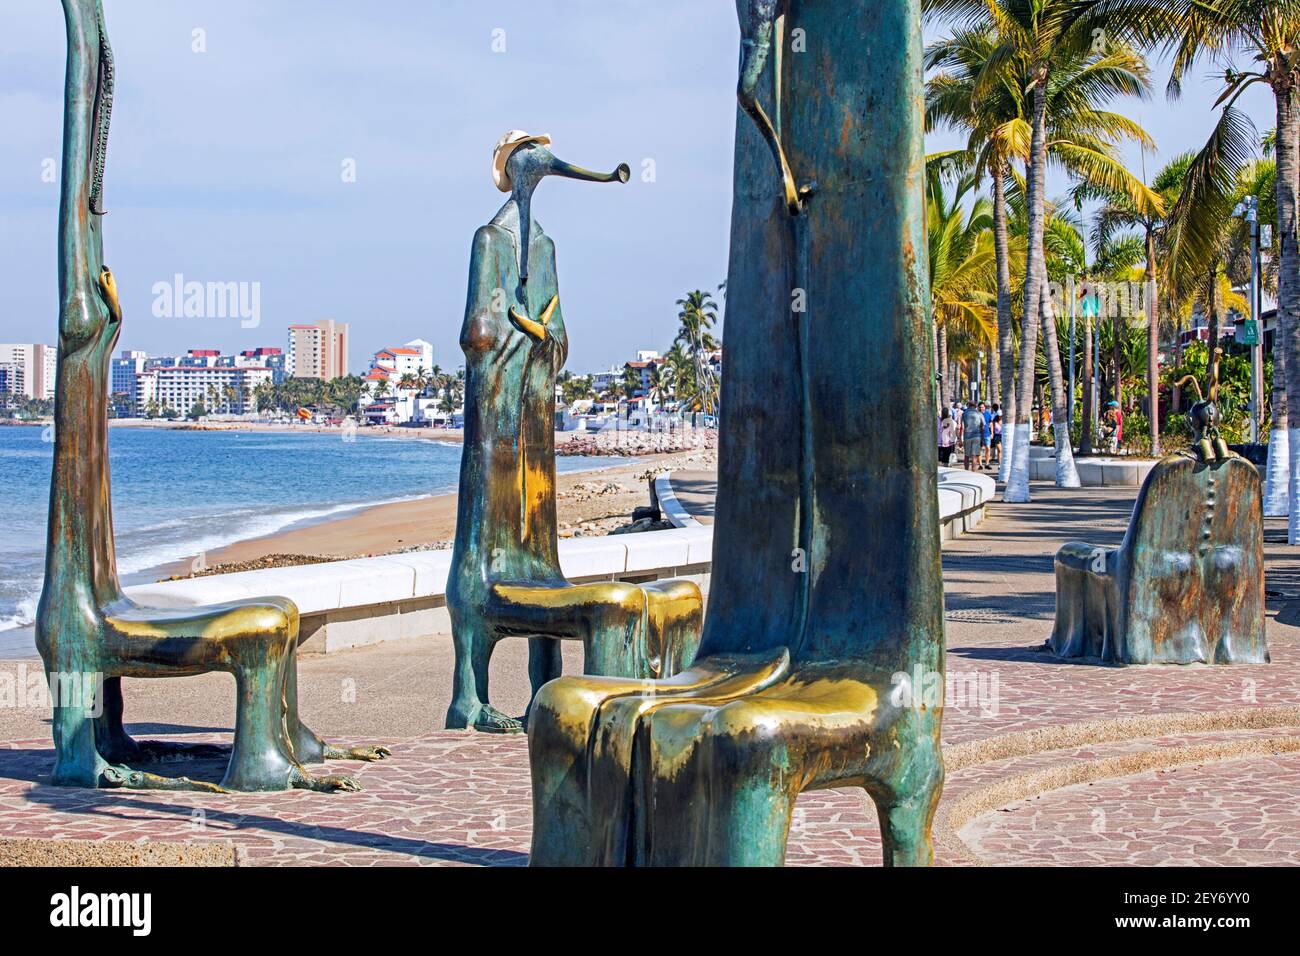 Sculpture La rotonda del Mar / Rotunda of the Sea by Alejandro Colunga along the Malecón, esplanade in beach resort Puerto Vallarta, Jalisco, Mexico Stock Photo